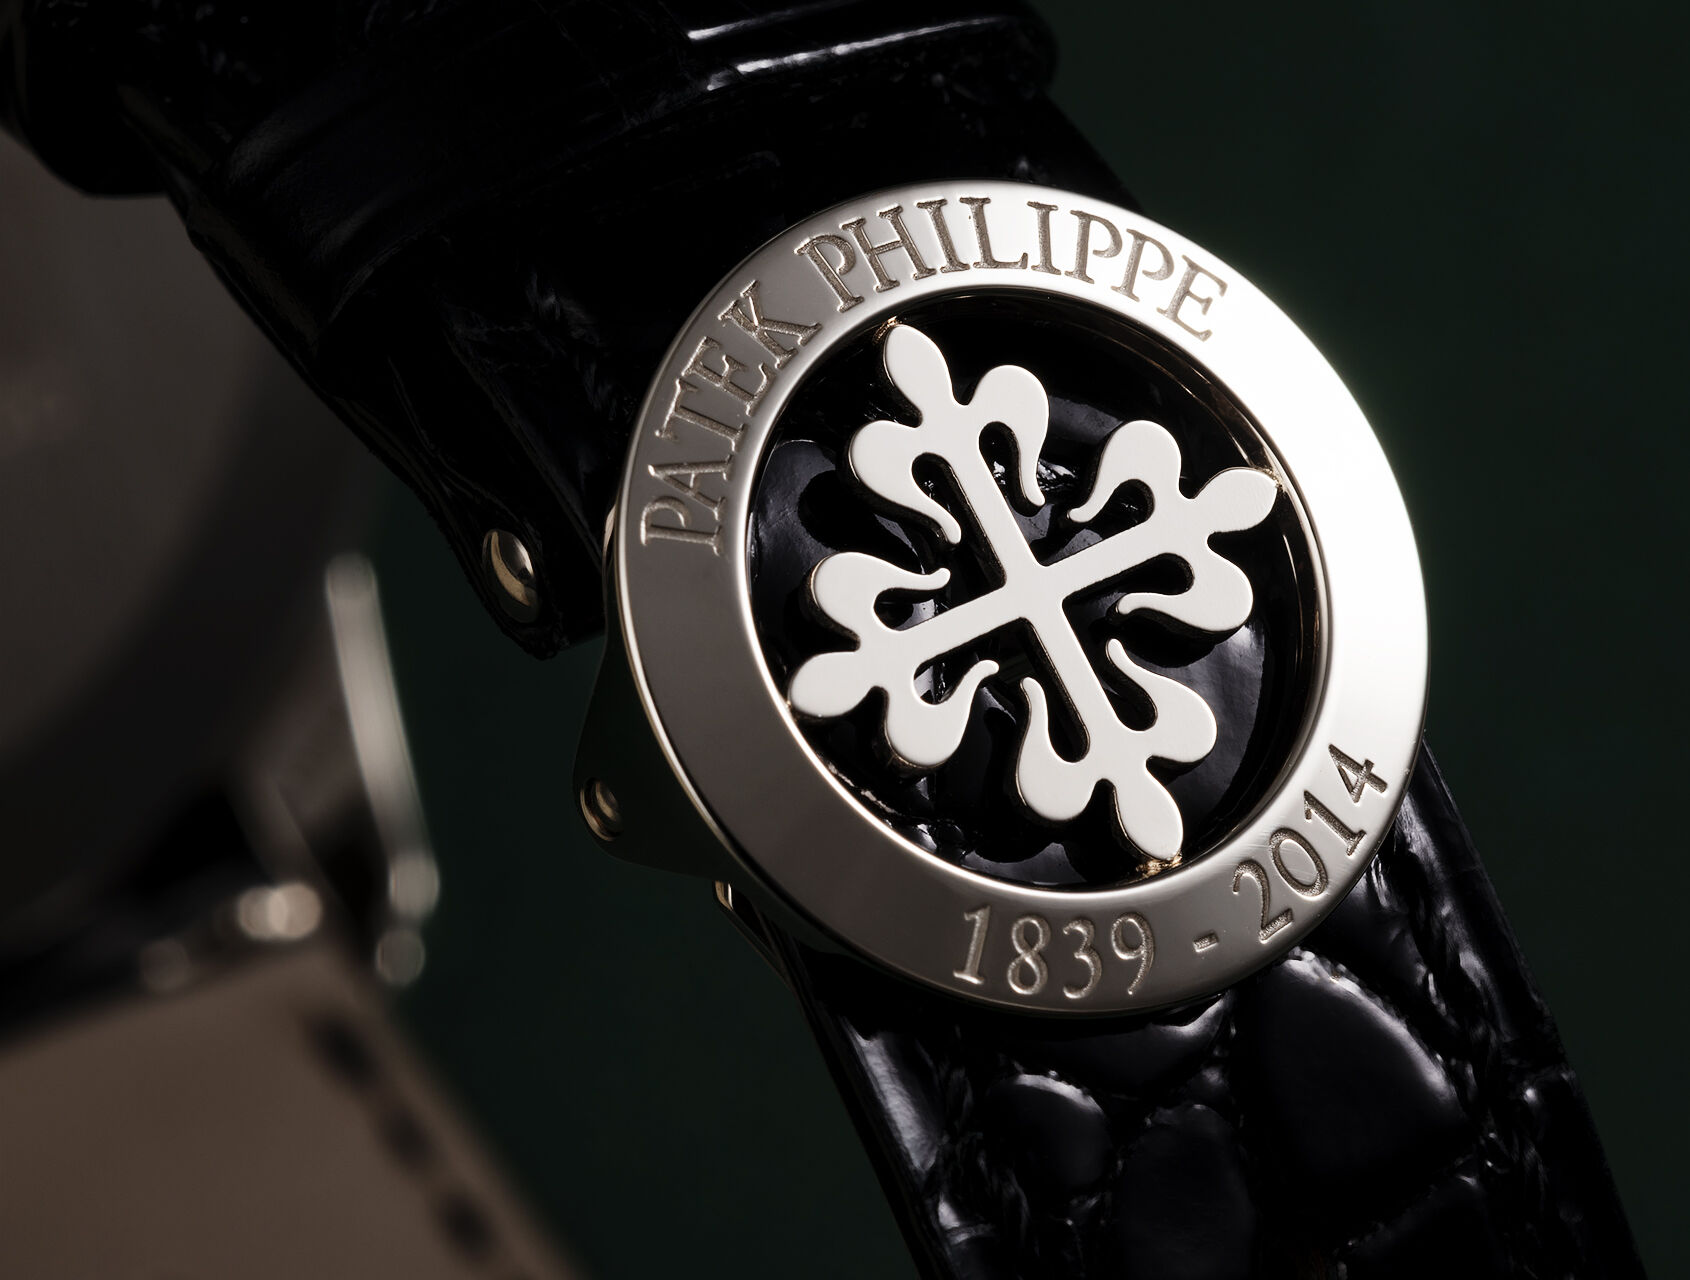 ref 5975G-001 | 175th Anniversary | Patek Philippe Multi-Scale Chronograph